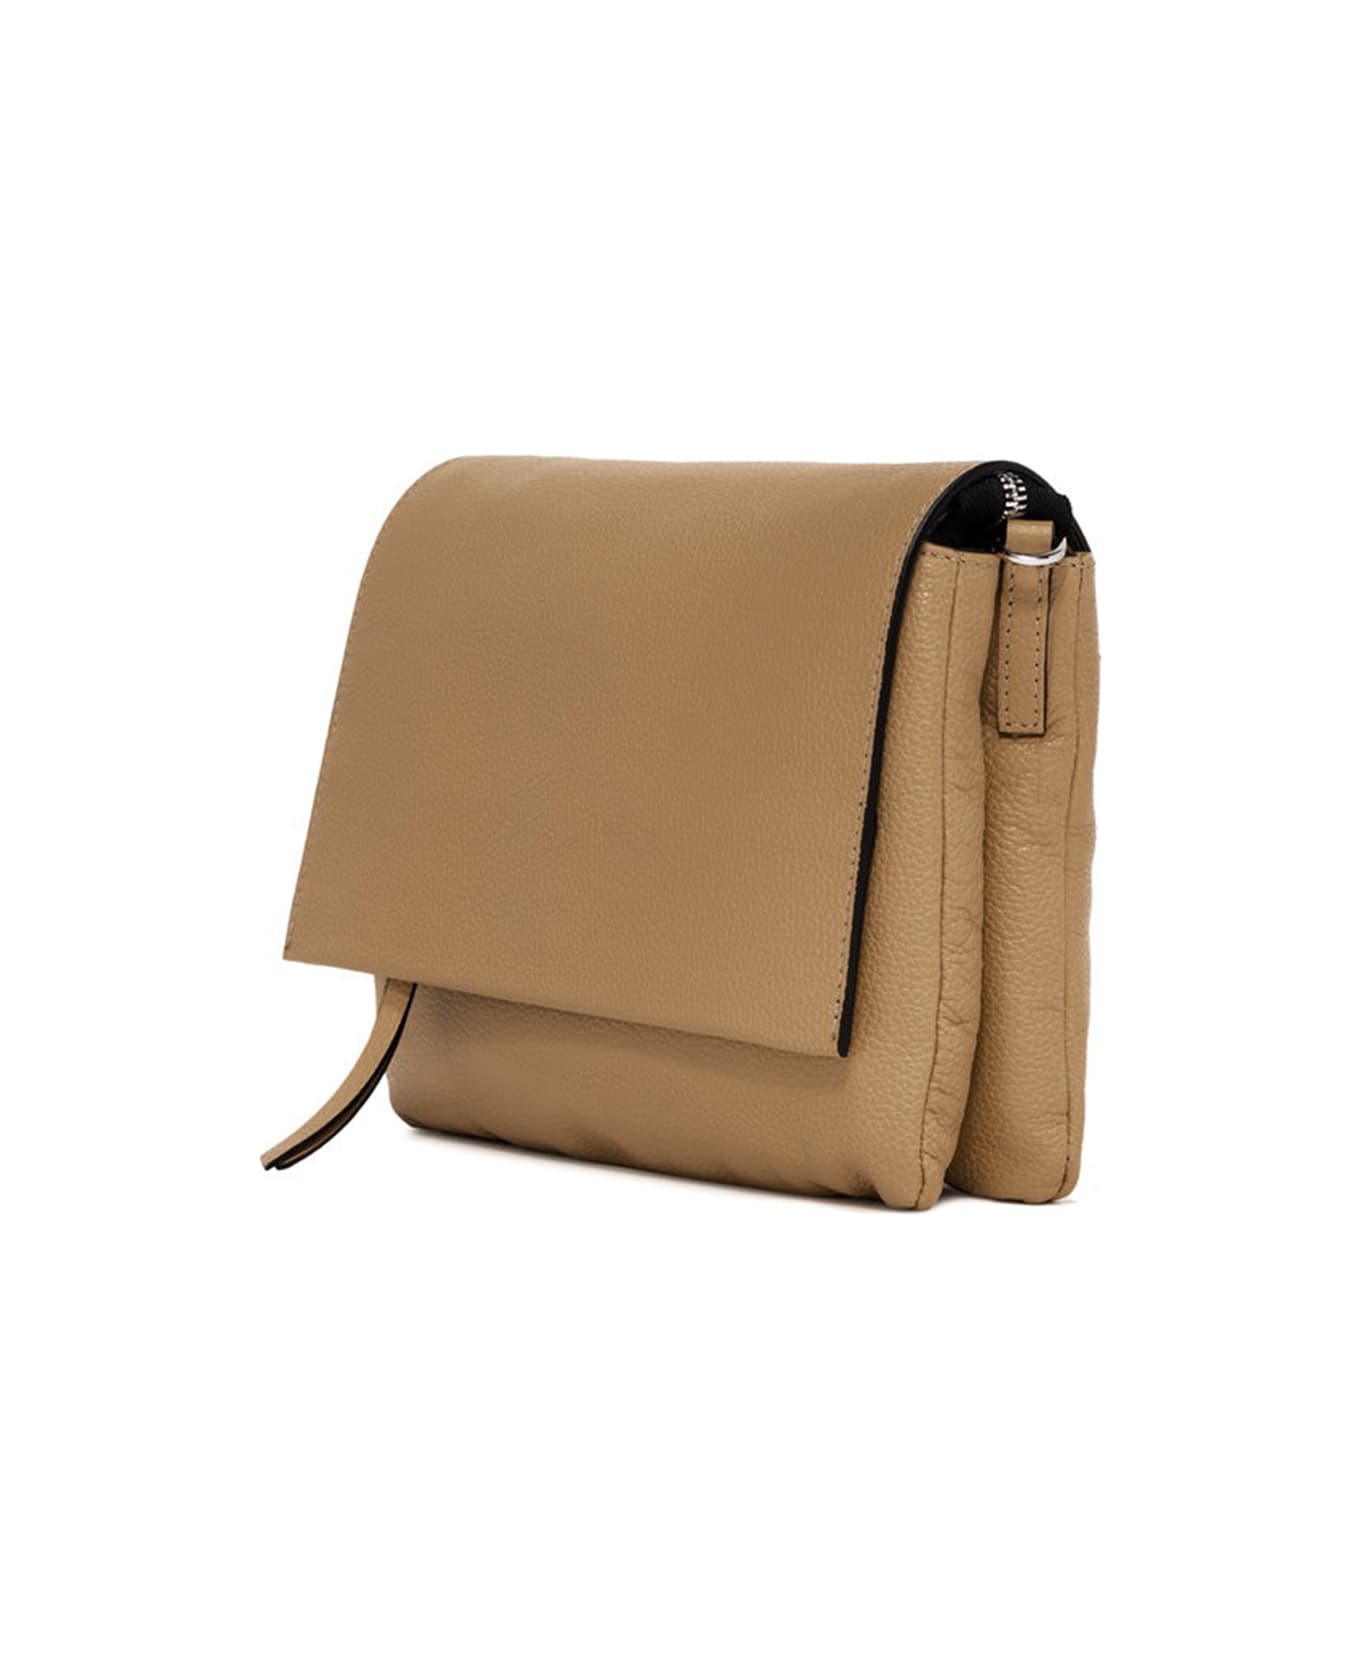 Gianni Chiarini Three Leather Shoulder Bag - NATURE